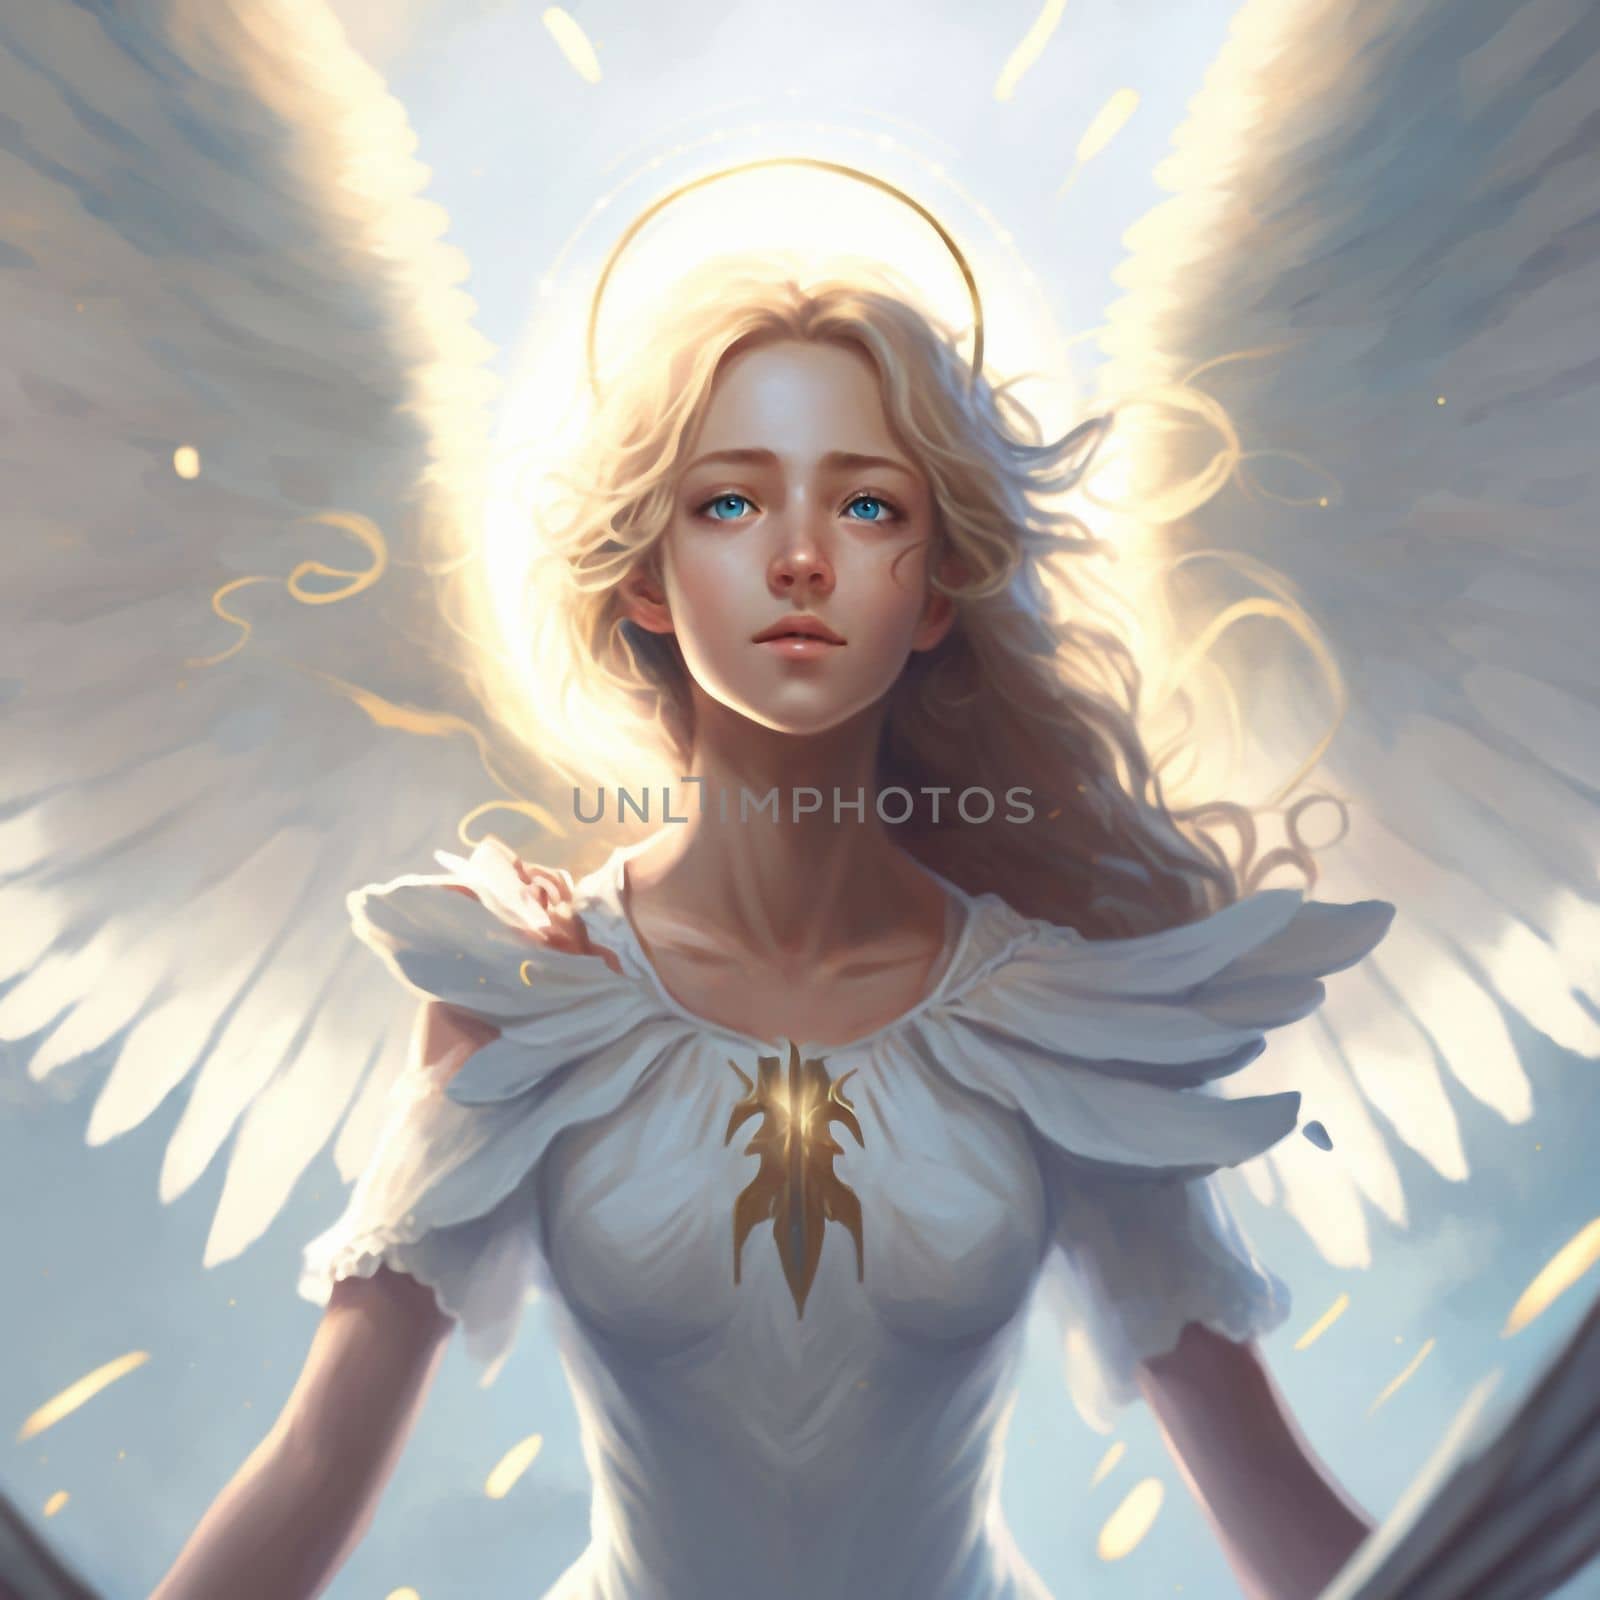 Angel girl descends from heaven by NeuroSky